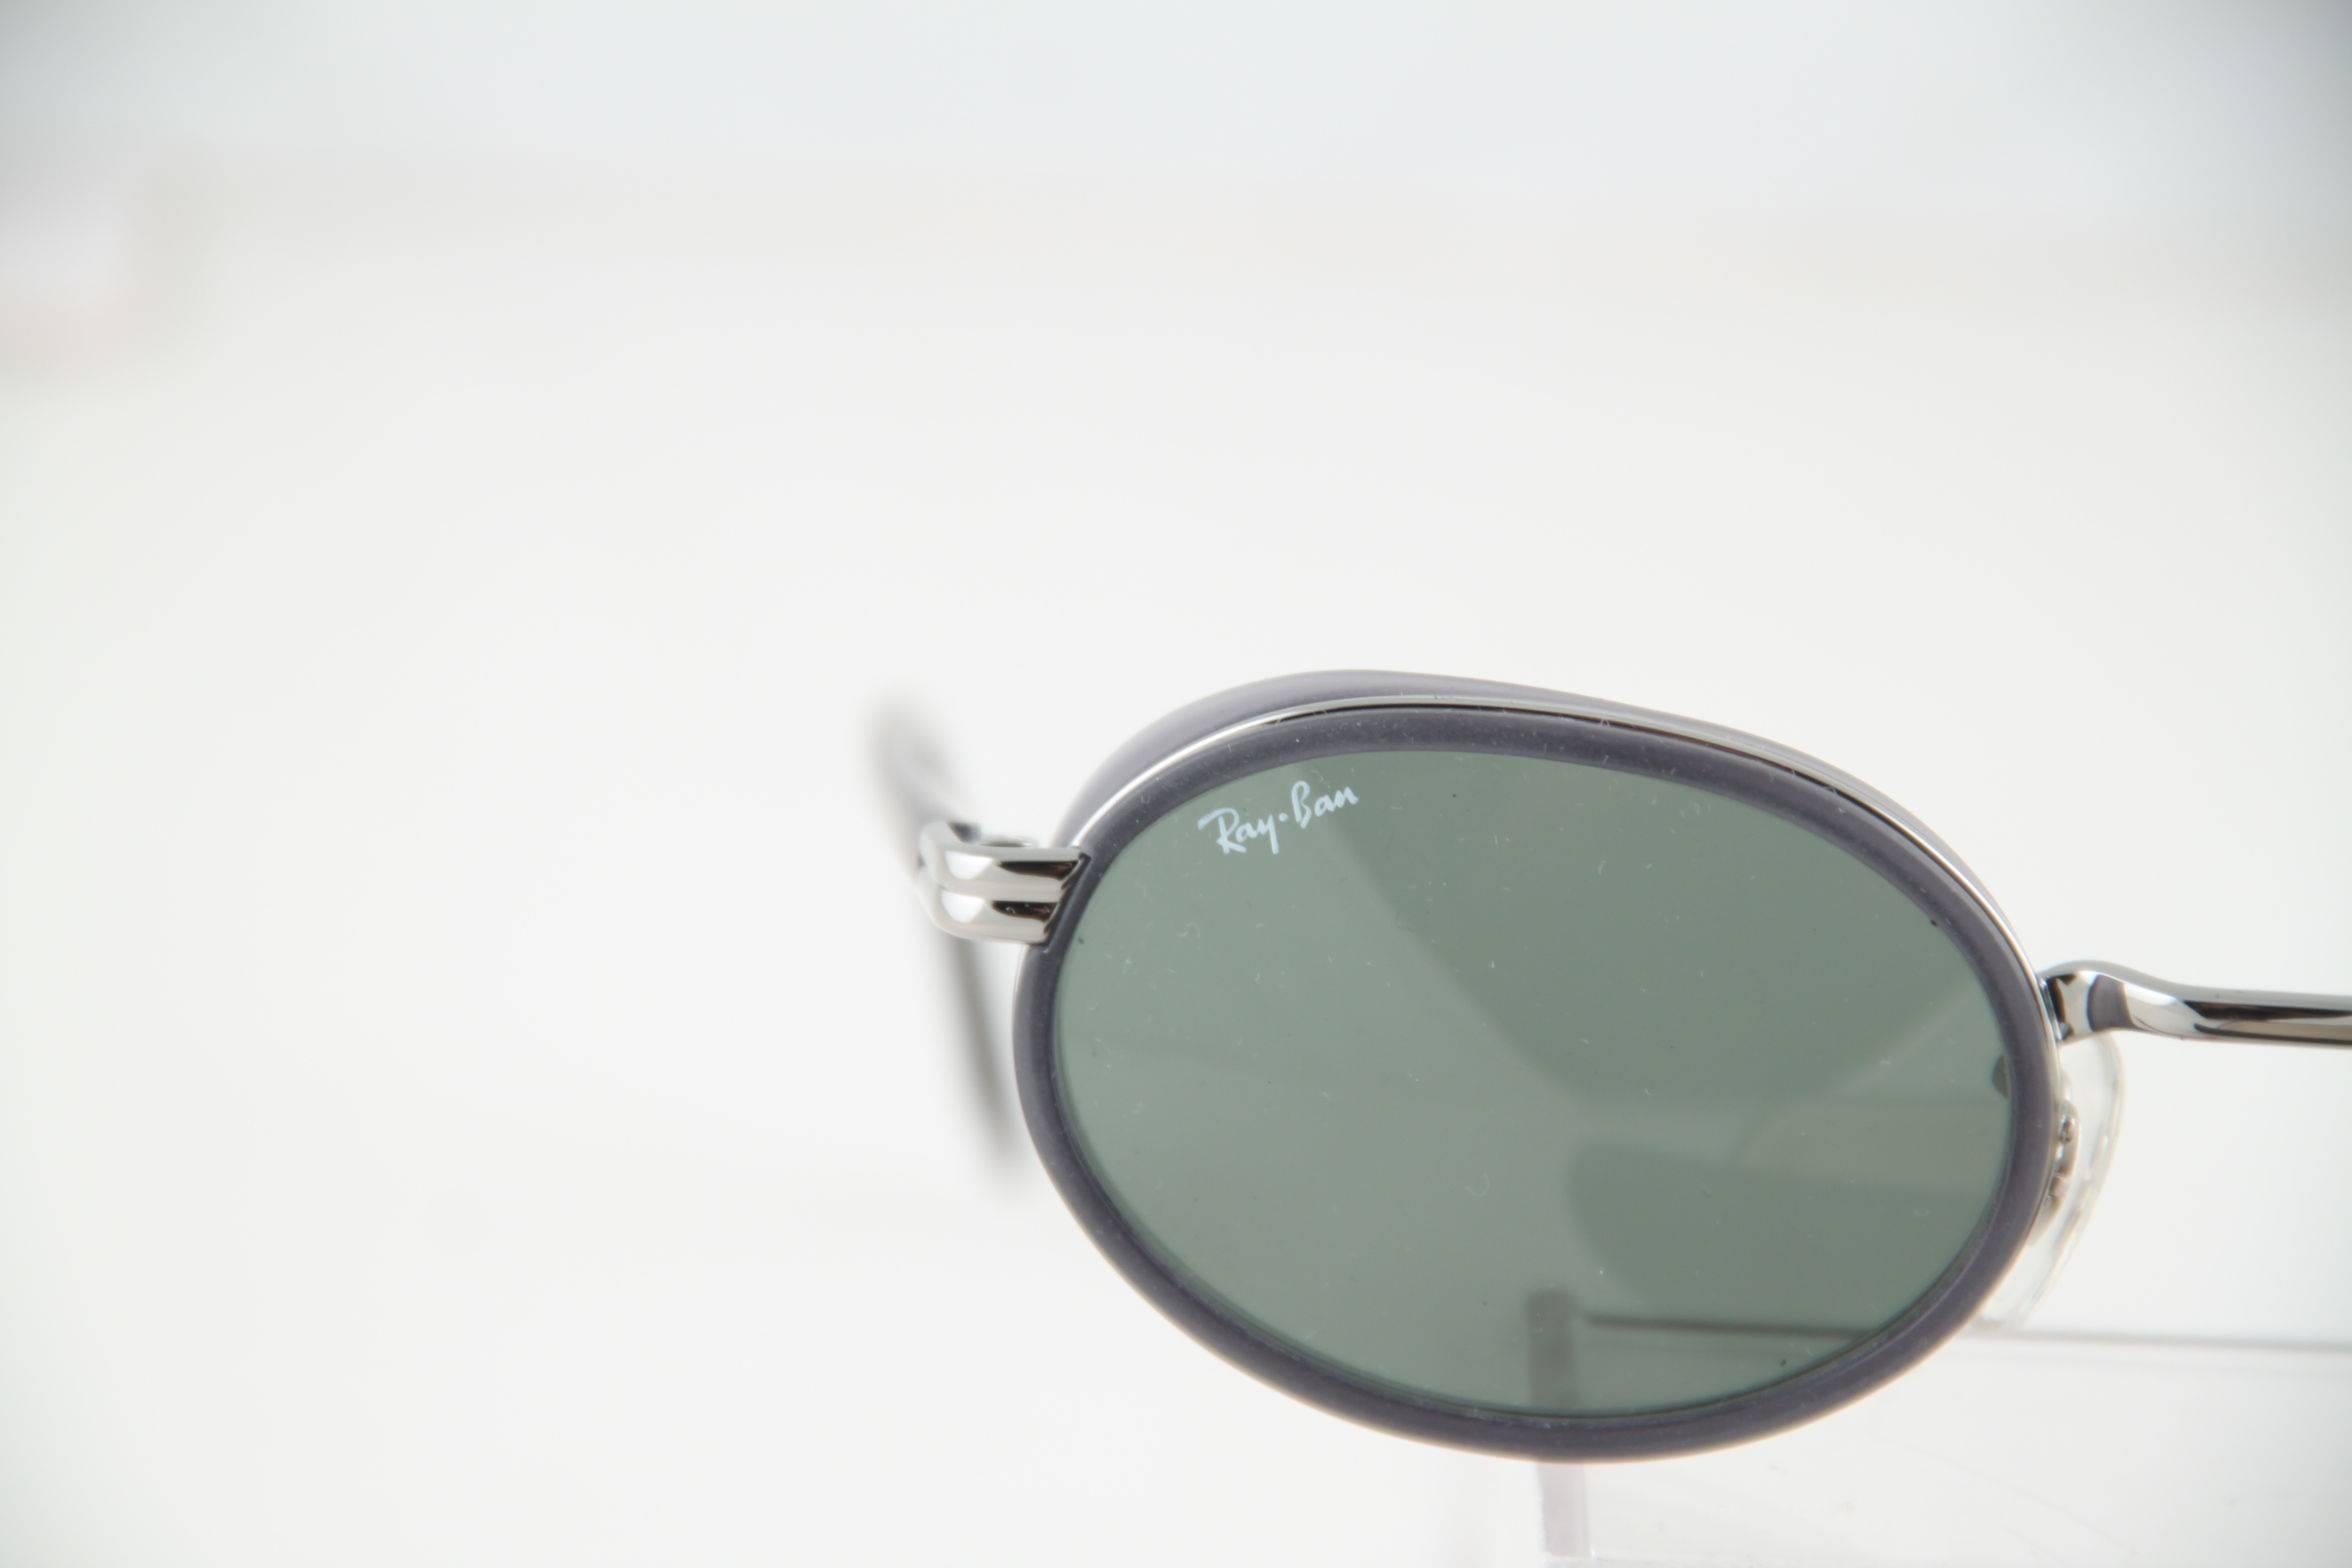 RAY-BAN B&L Vintage GRAY MINT unisex Sunglasses RB3037 W2813 50mm SIDE SHIELDS 2